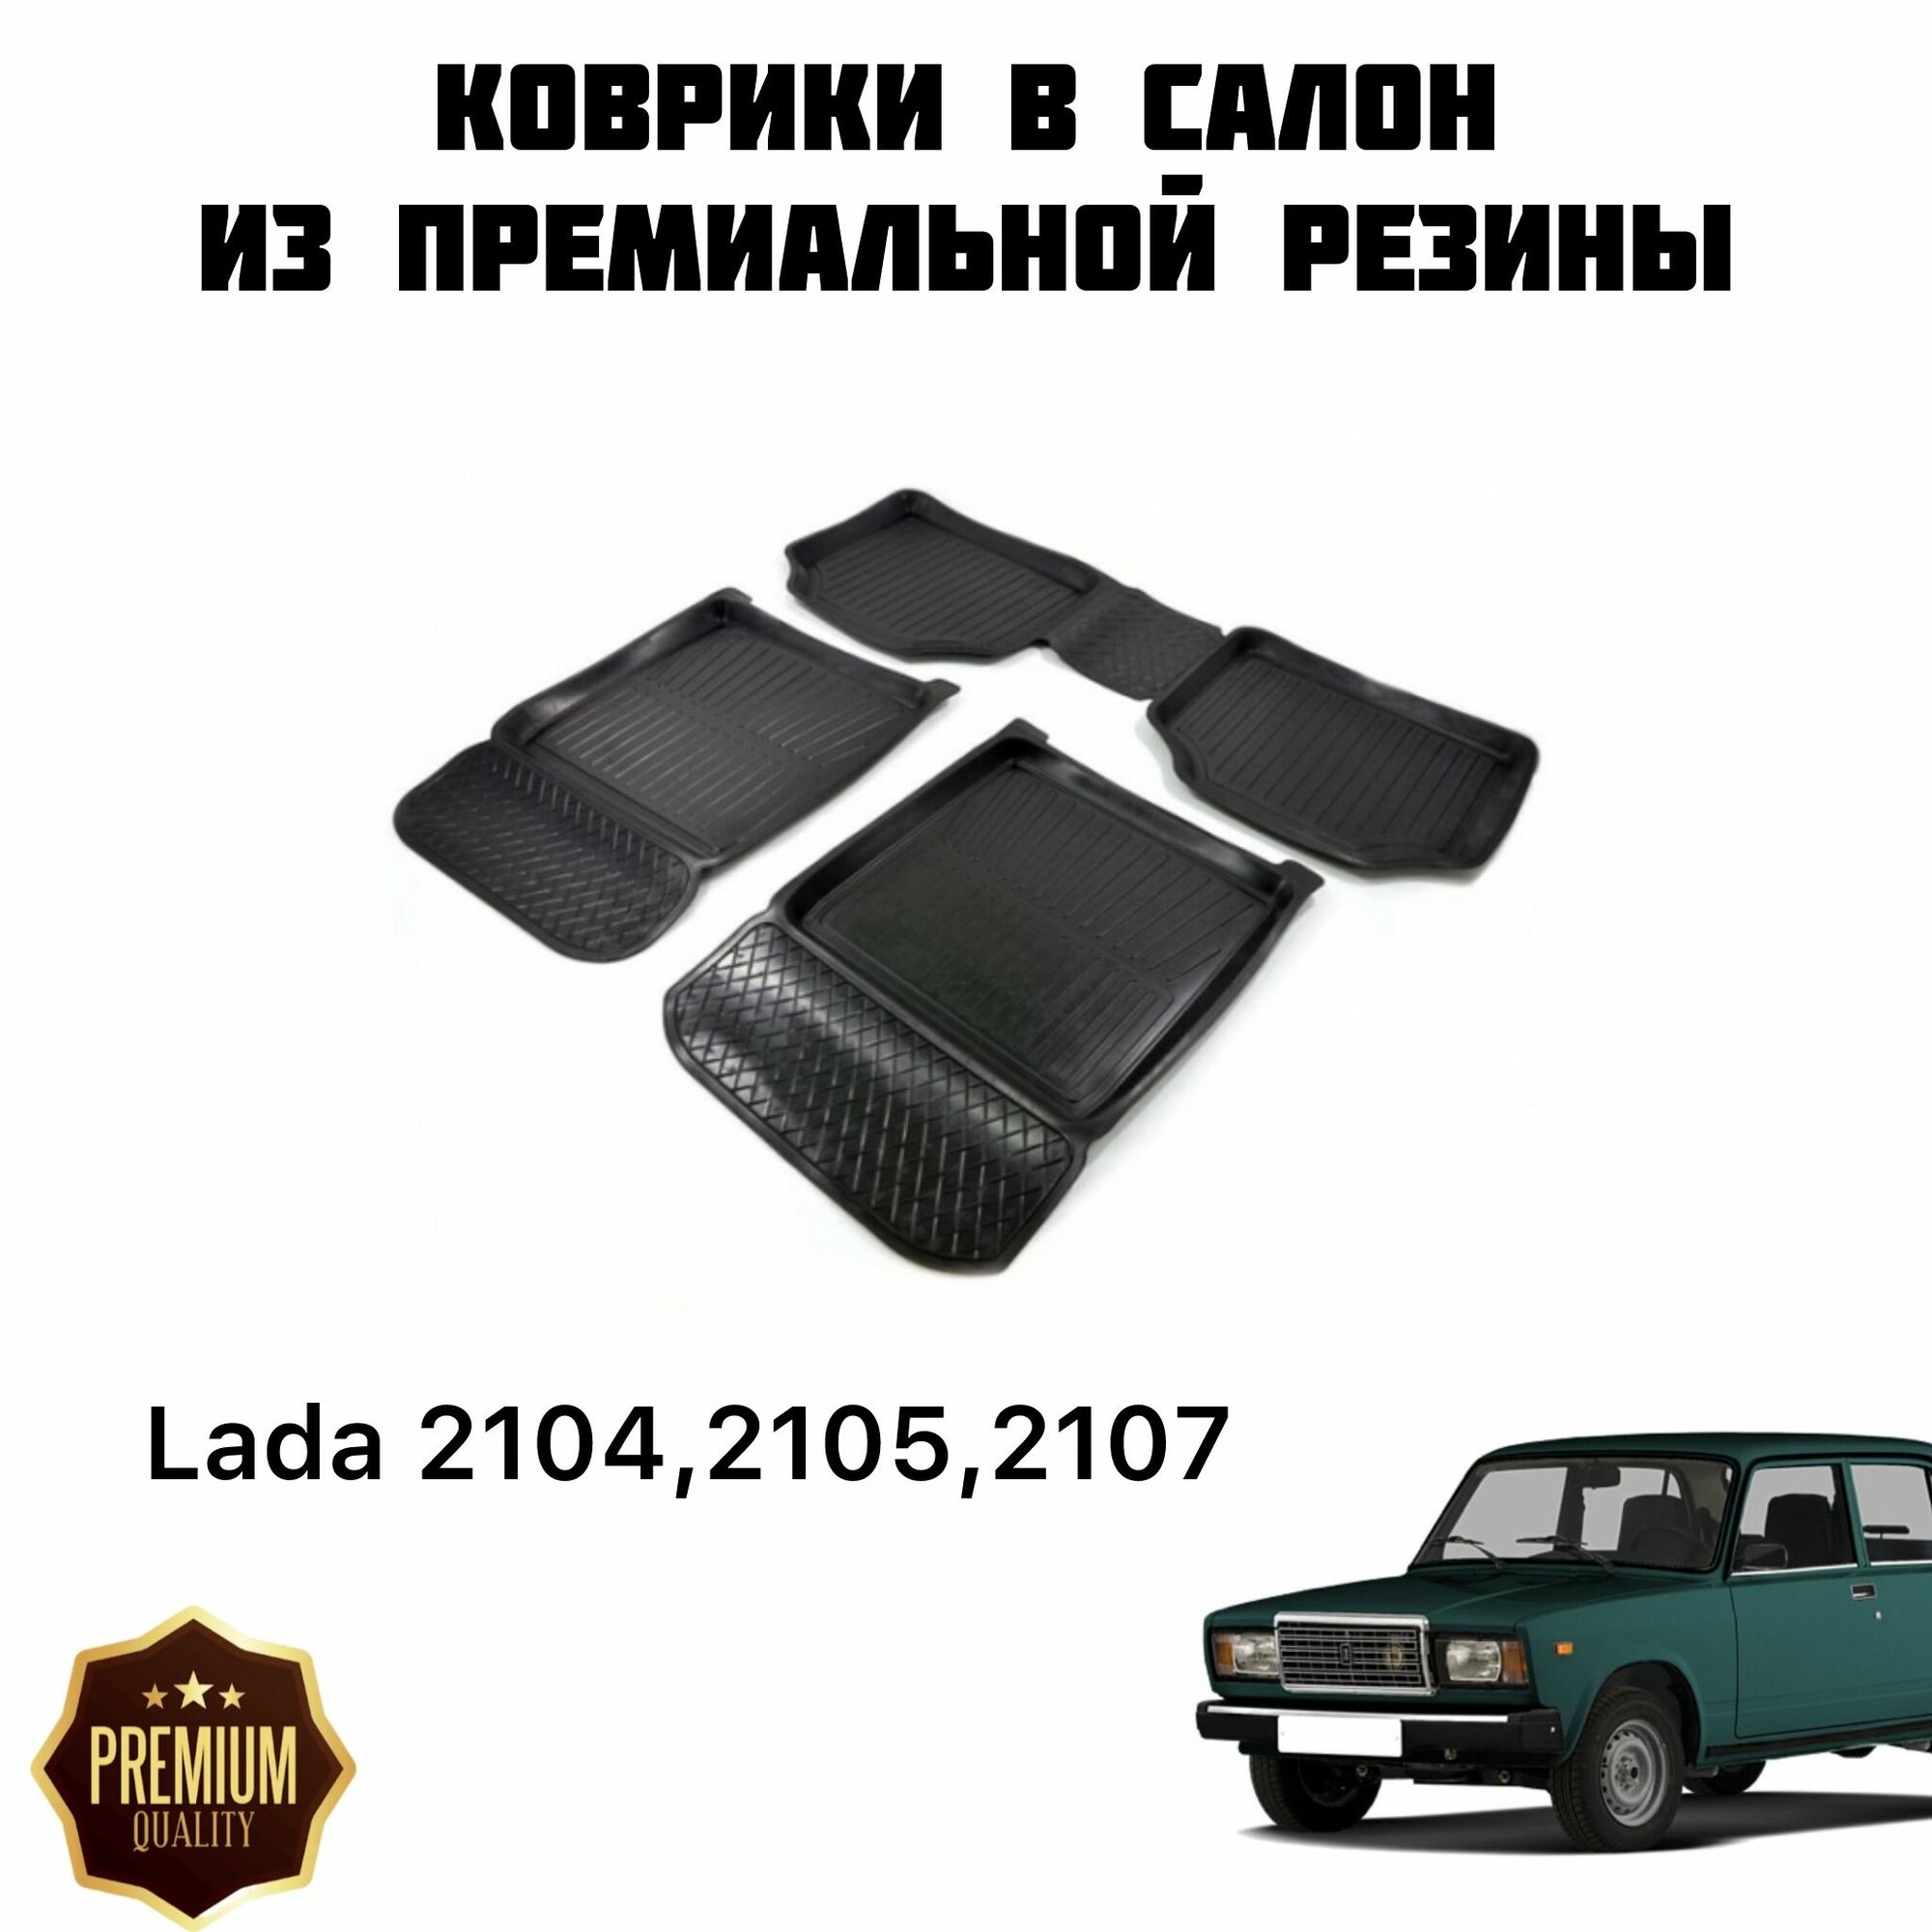 Резиновые коврики для Lada 2104,2105,2107 / Коврики Ваз 2104,2105,2107